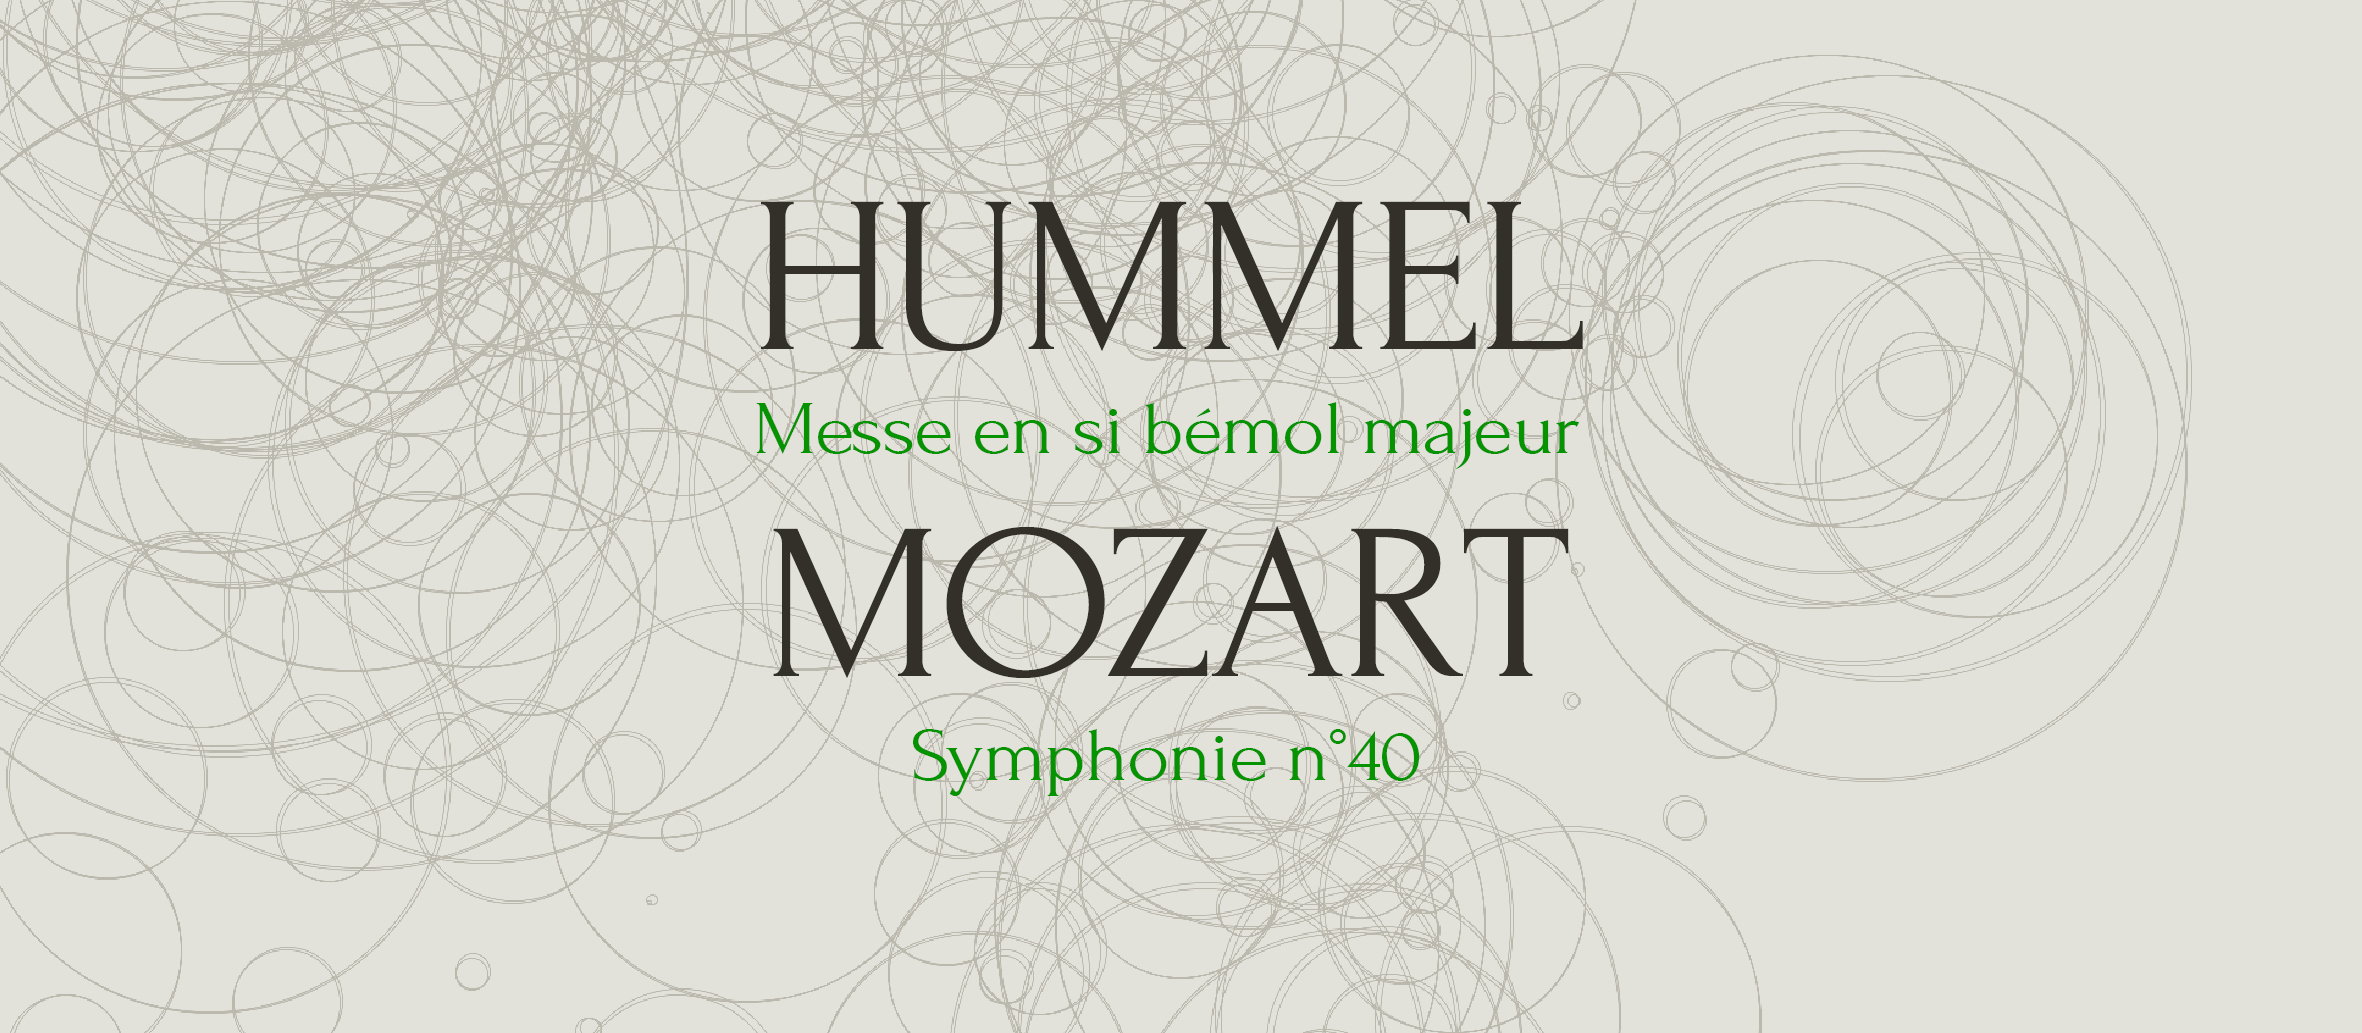 Bandeau Hummel et Mozart (carousel)